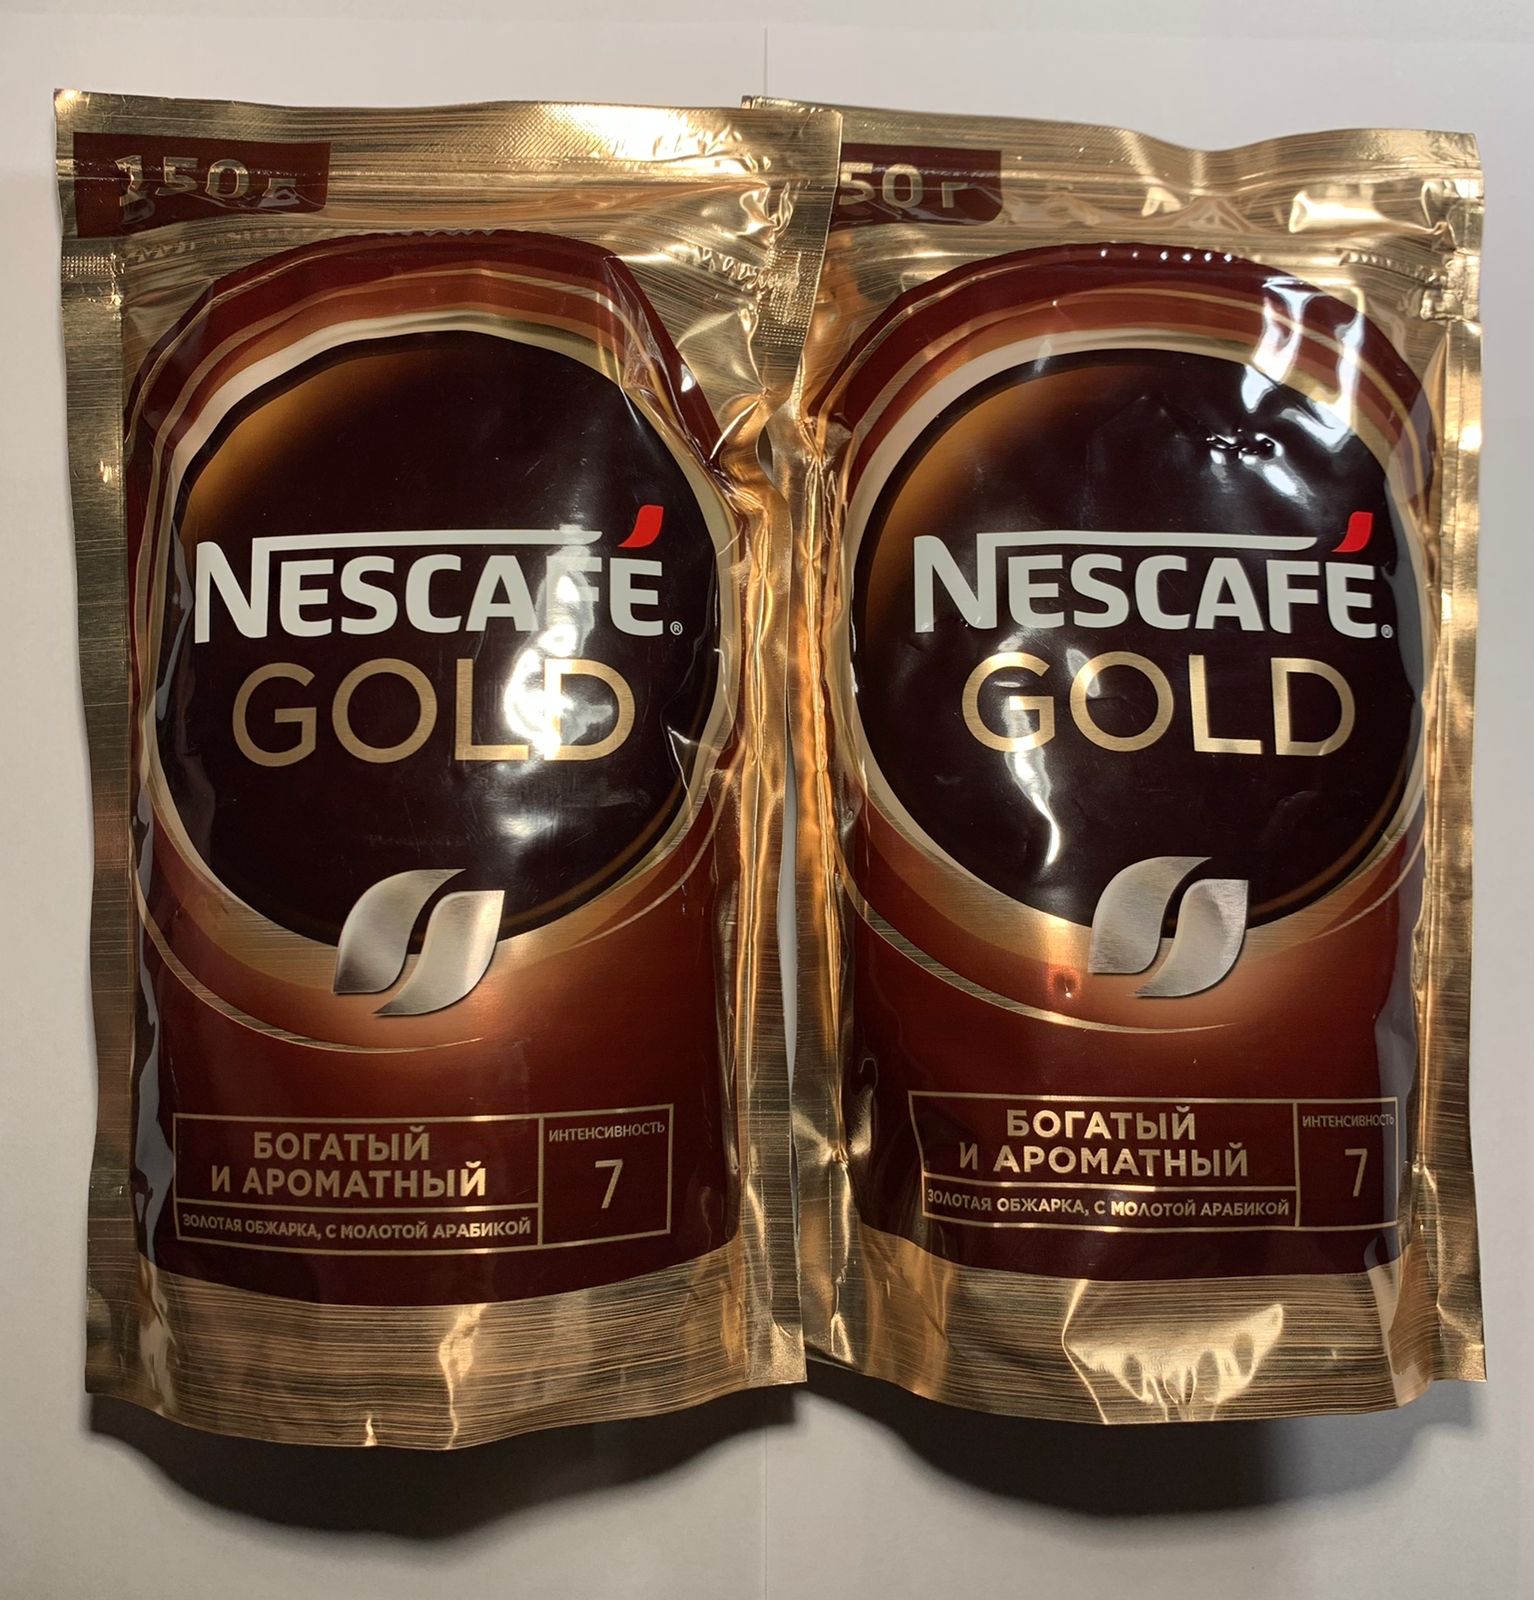 Nescafe gold intenso. Нескафе Голд 2г 30. Кофе Migel Gold 150г. Нескафе Голд 130 грамм. Какое кофе лучше Арабика или Нескафе Голд.